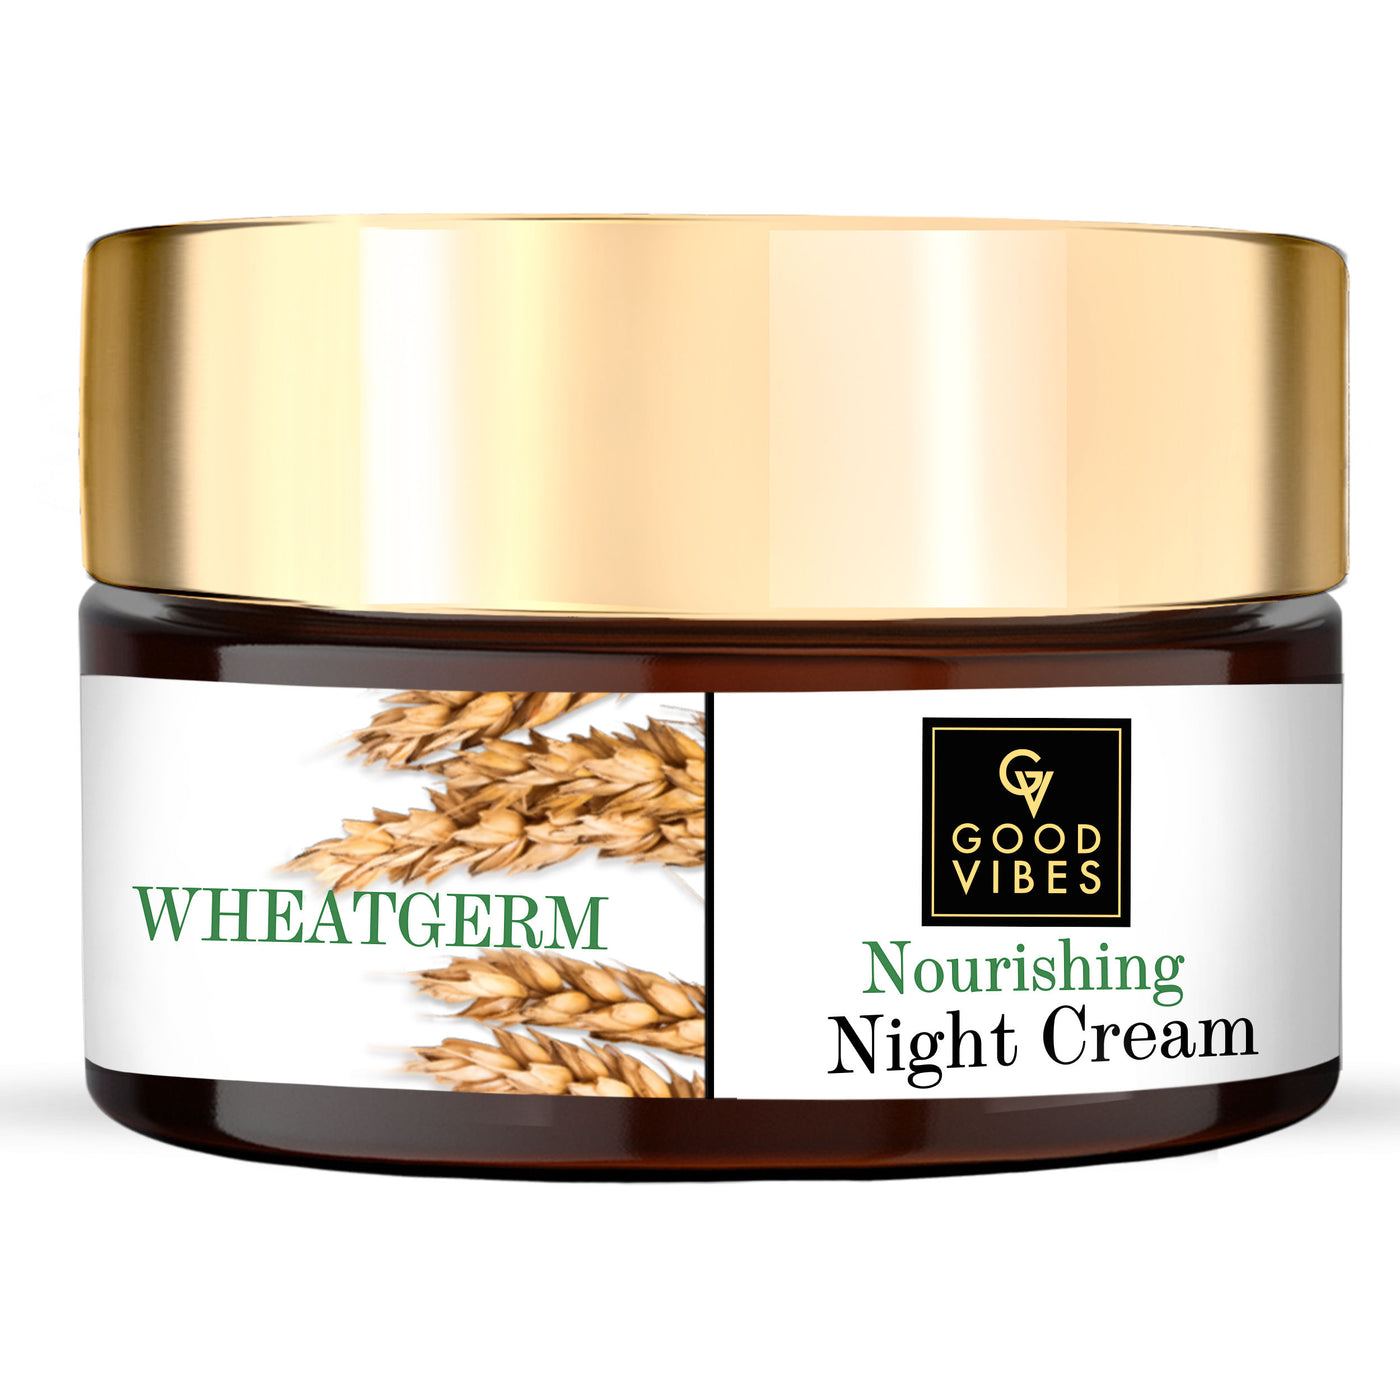 Good Vibes Nourishing Night Cream - Wheatgerm (100 g) - 1